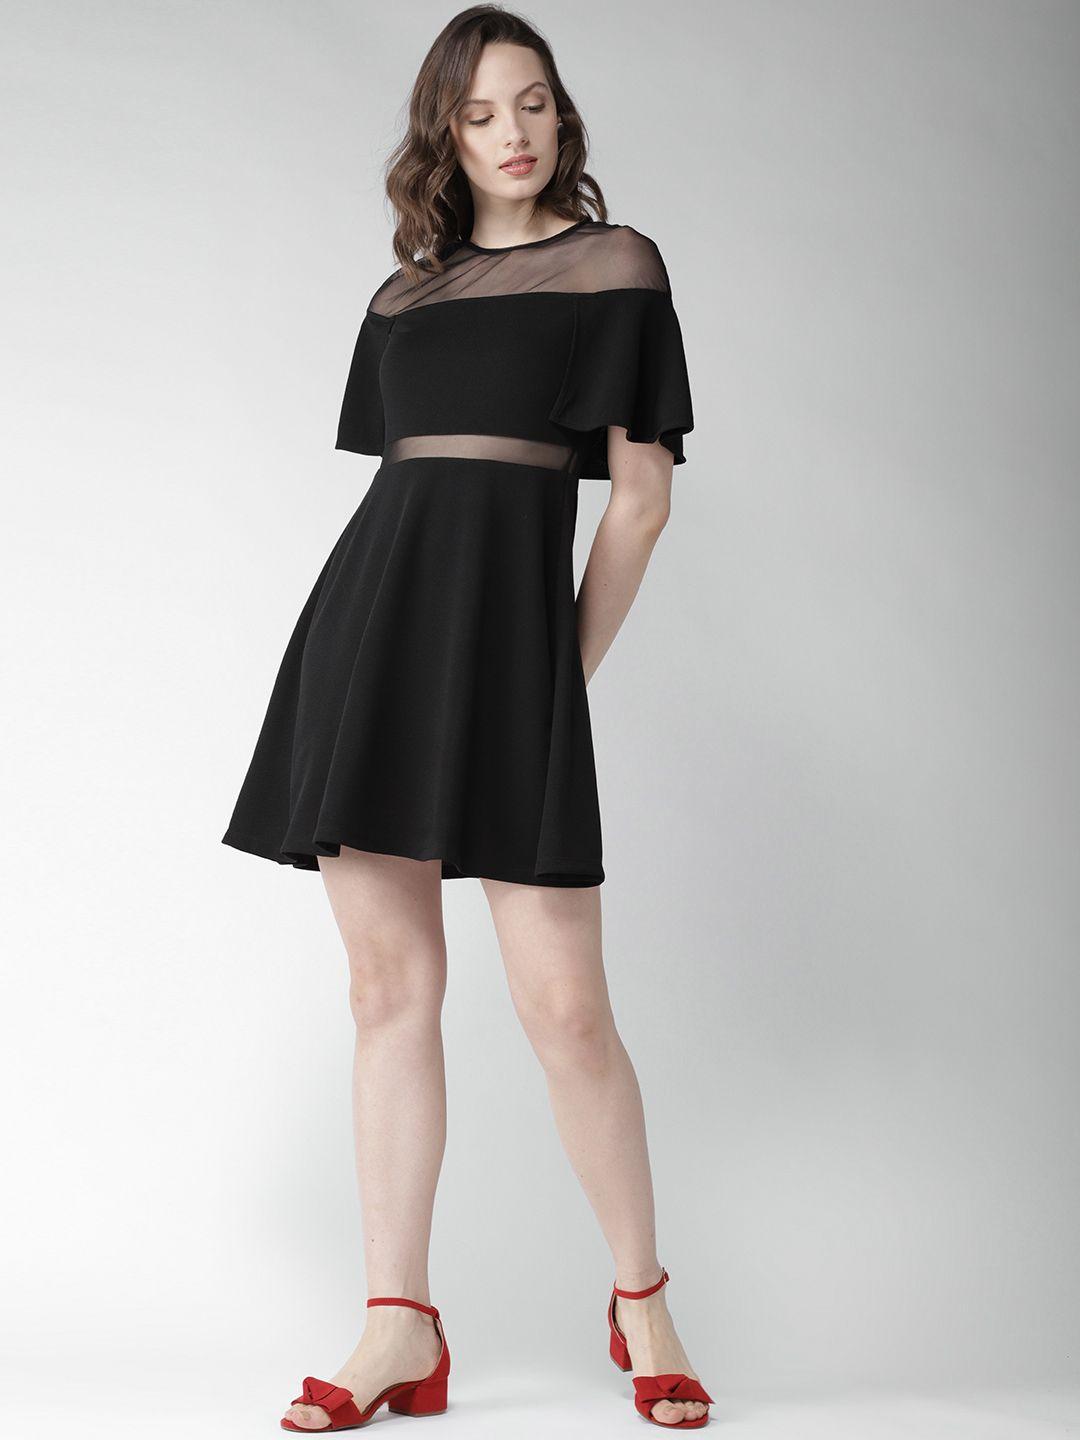 20dresses women black solid fit & flare dress